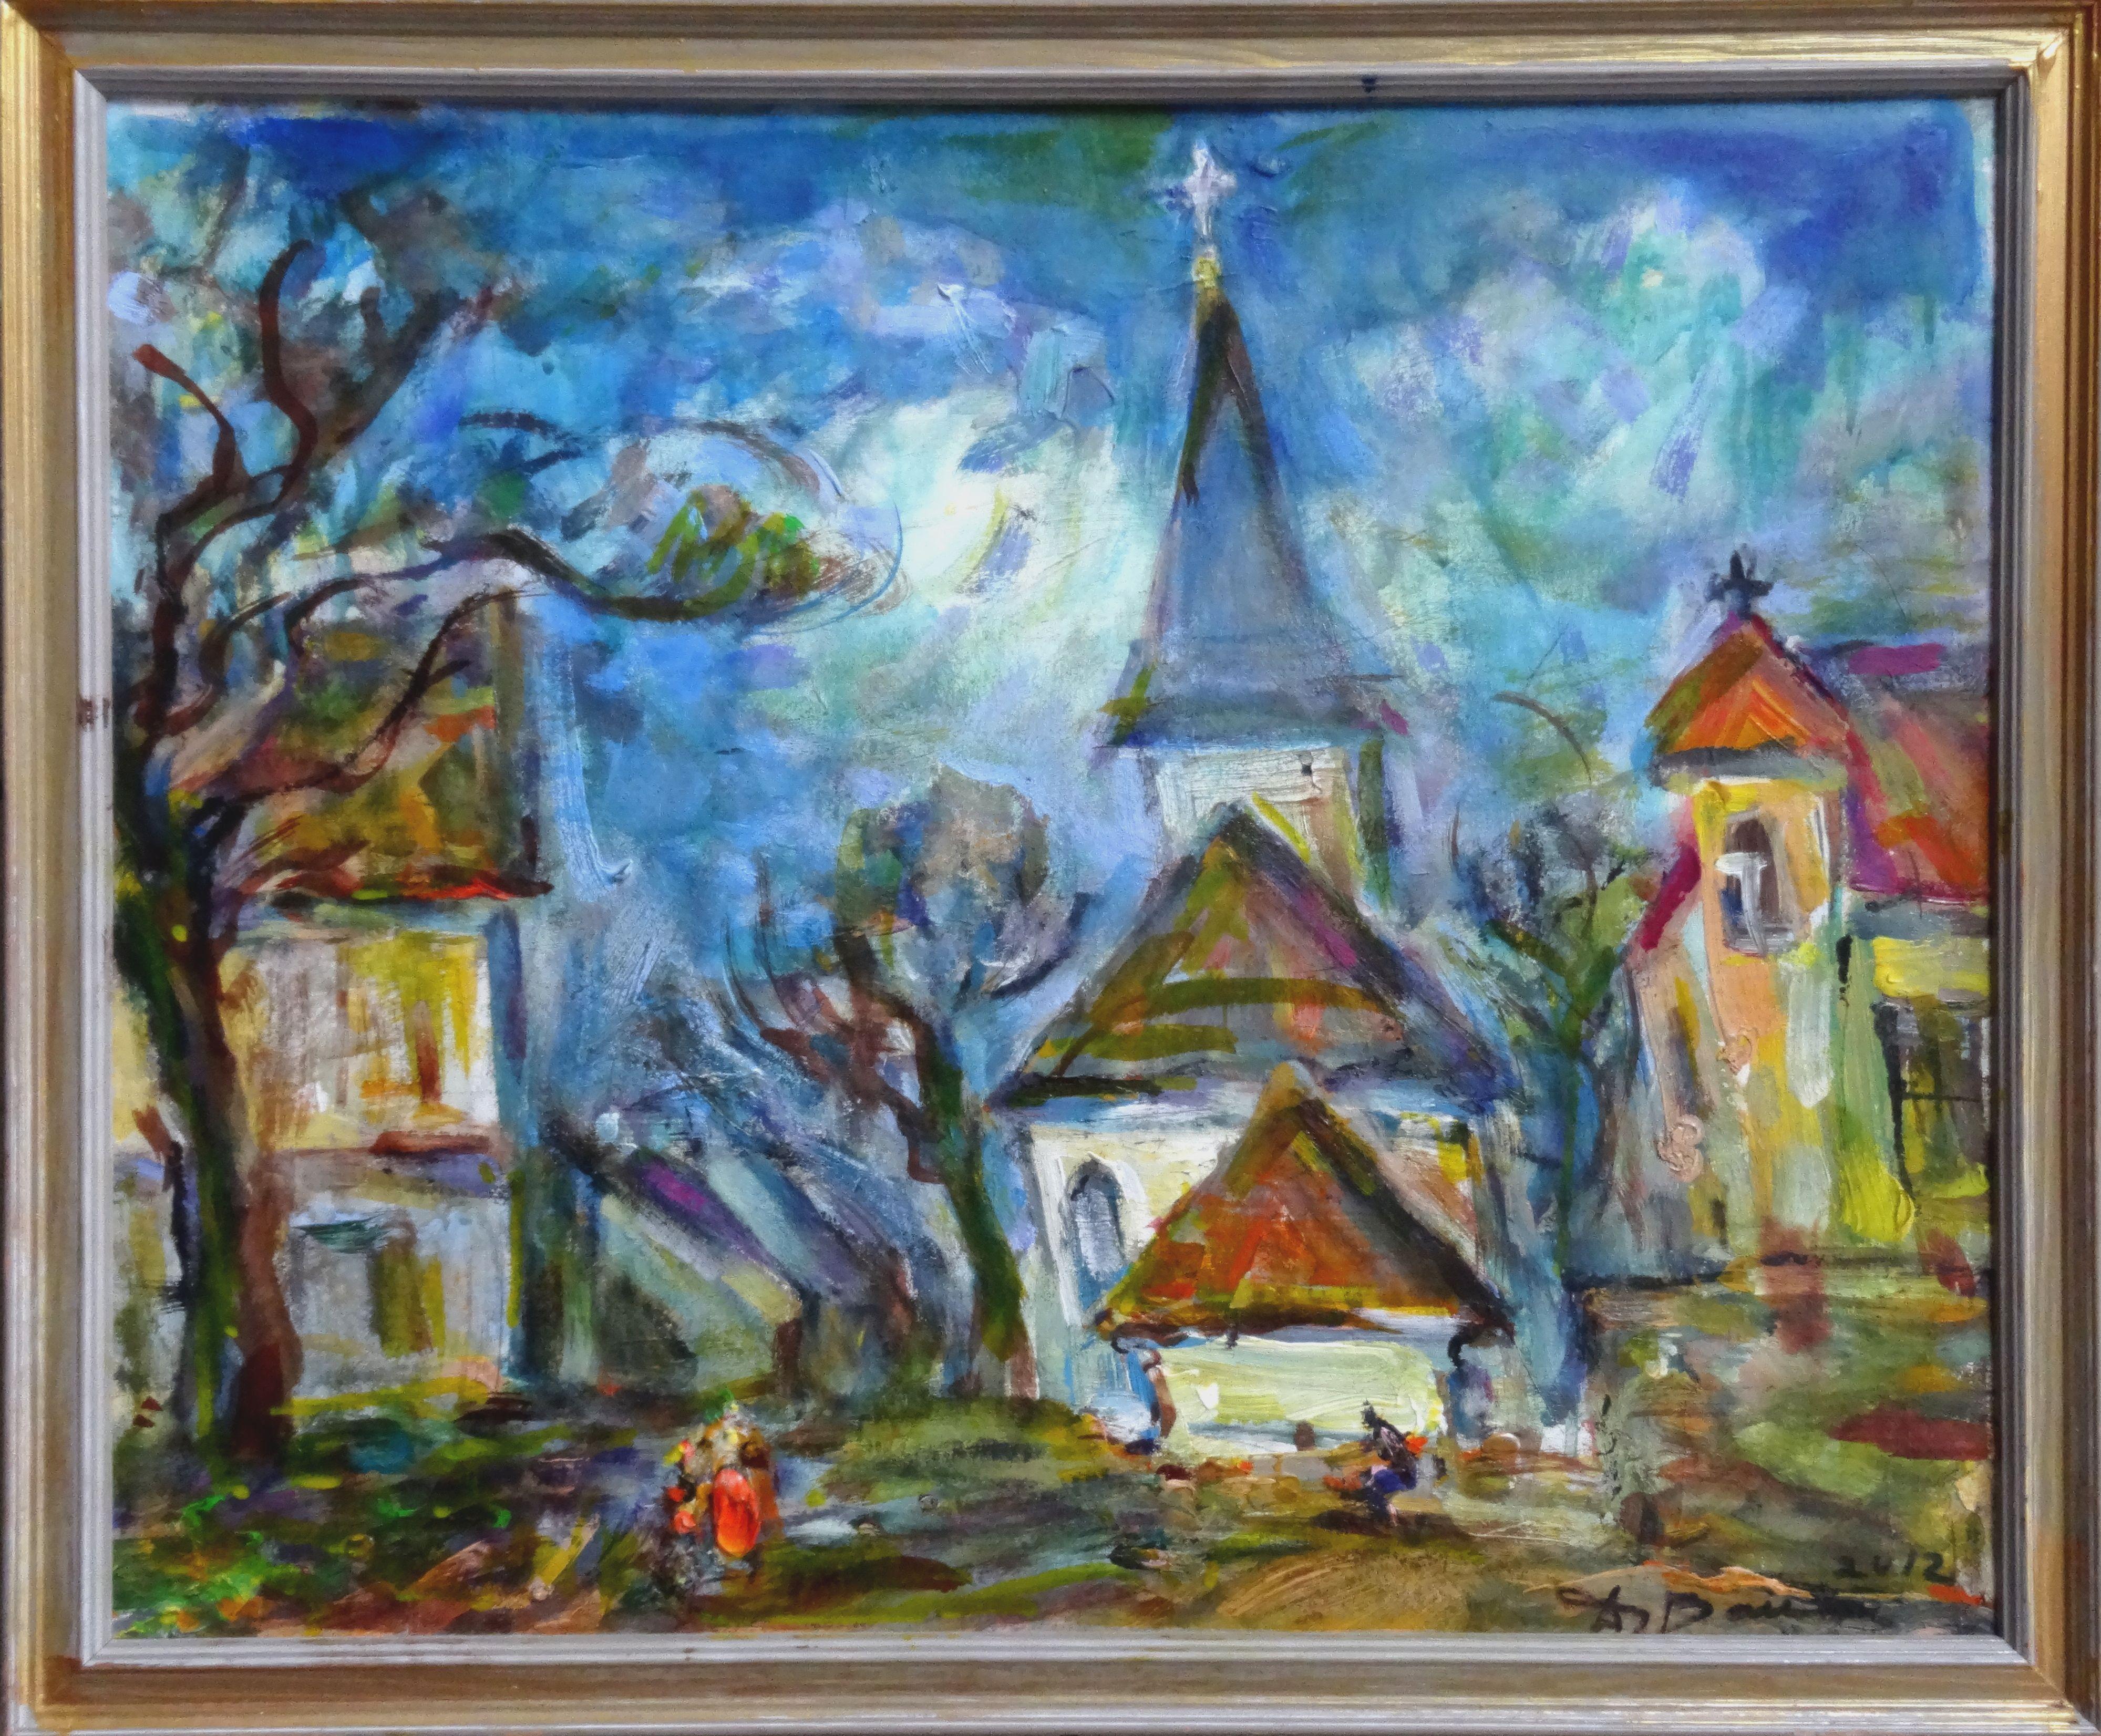 Rose Square by church. 2012, acrylic on paper, 44x55 cm - Painting by Dzidra Bauma